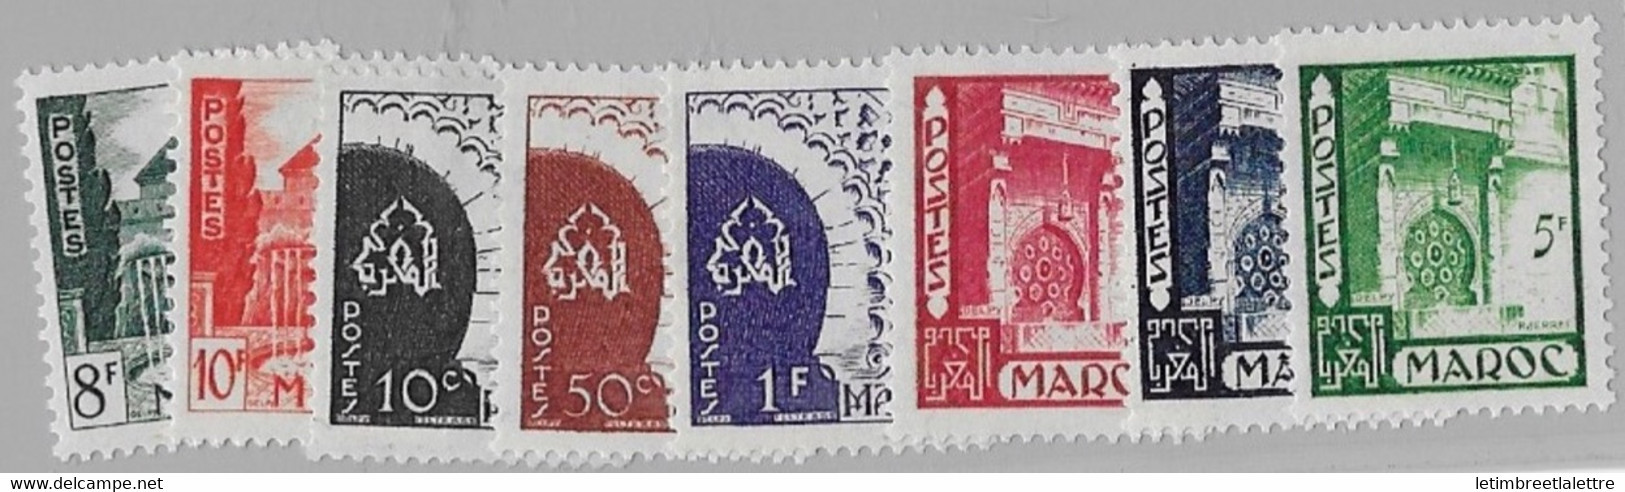 ⭐ Maroc - YT N° 277 à 284 ** - Neuf Sans Charnière - 1949 ⭐ - Ungebraucht